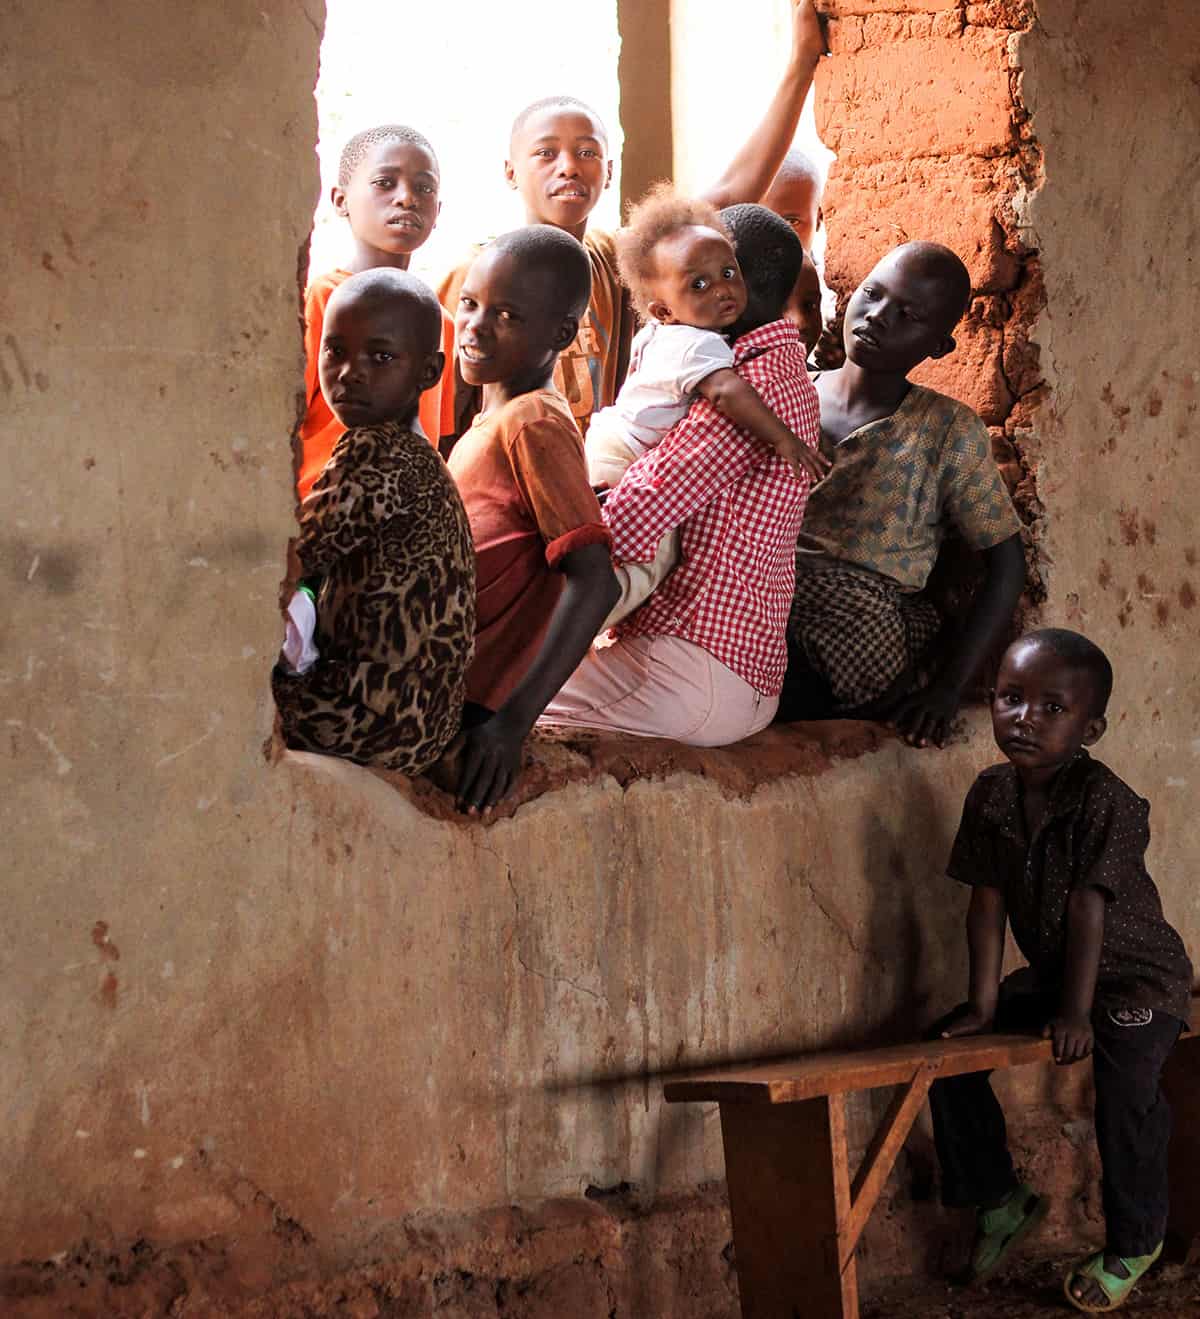 Rwanda children sitting in window.